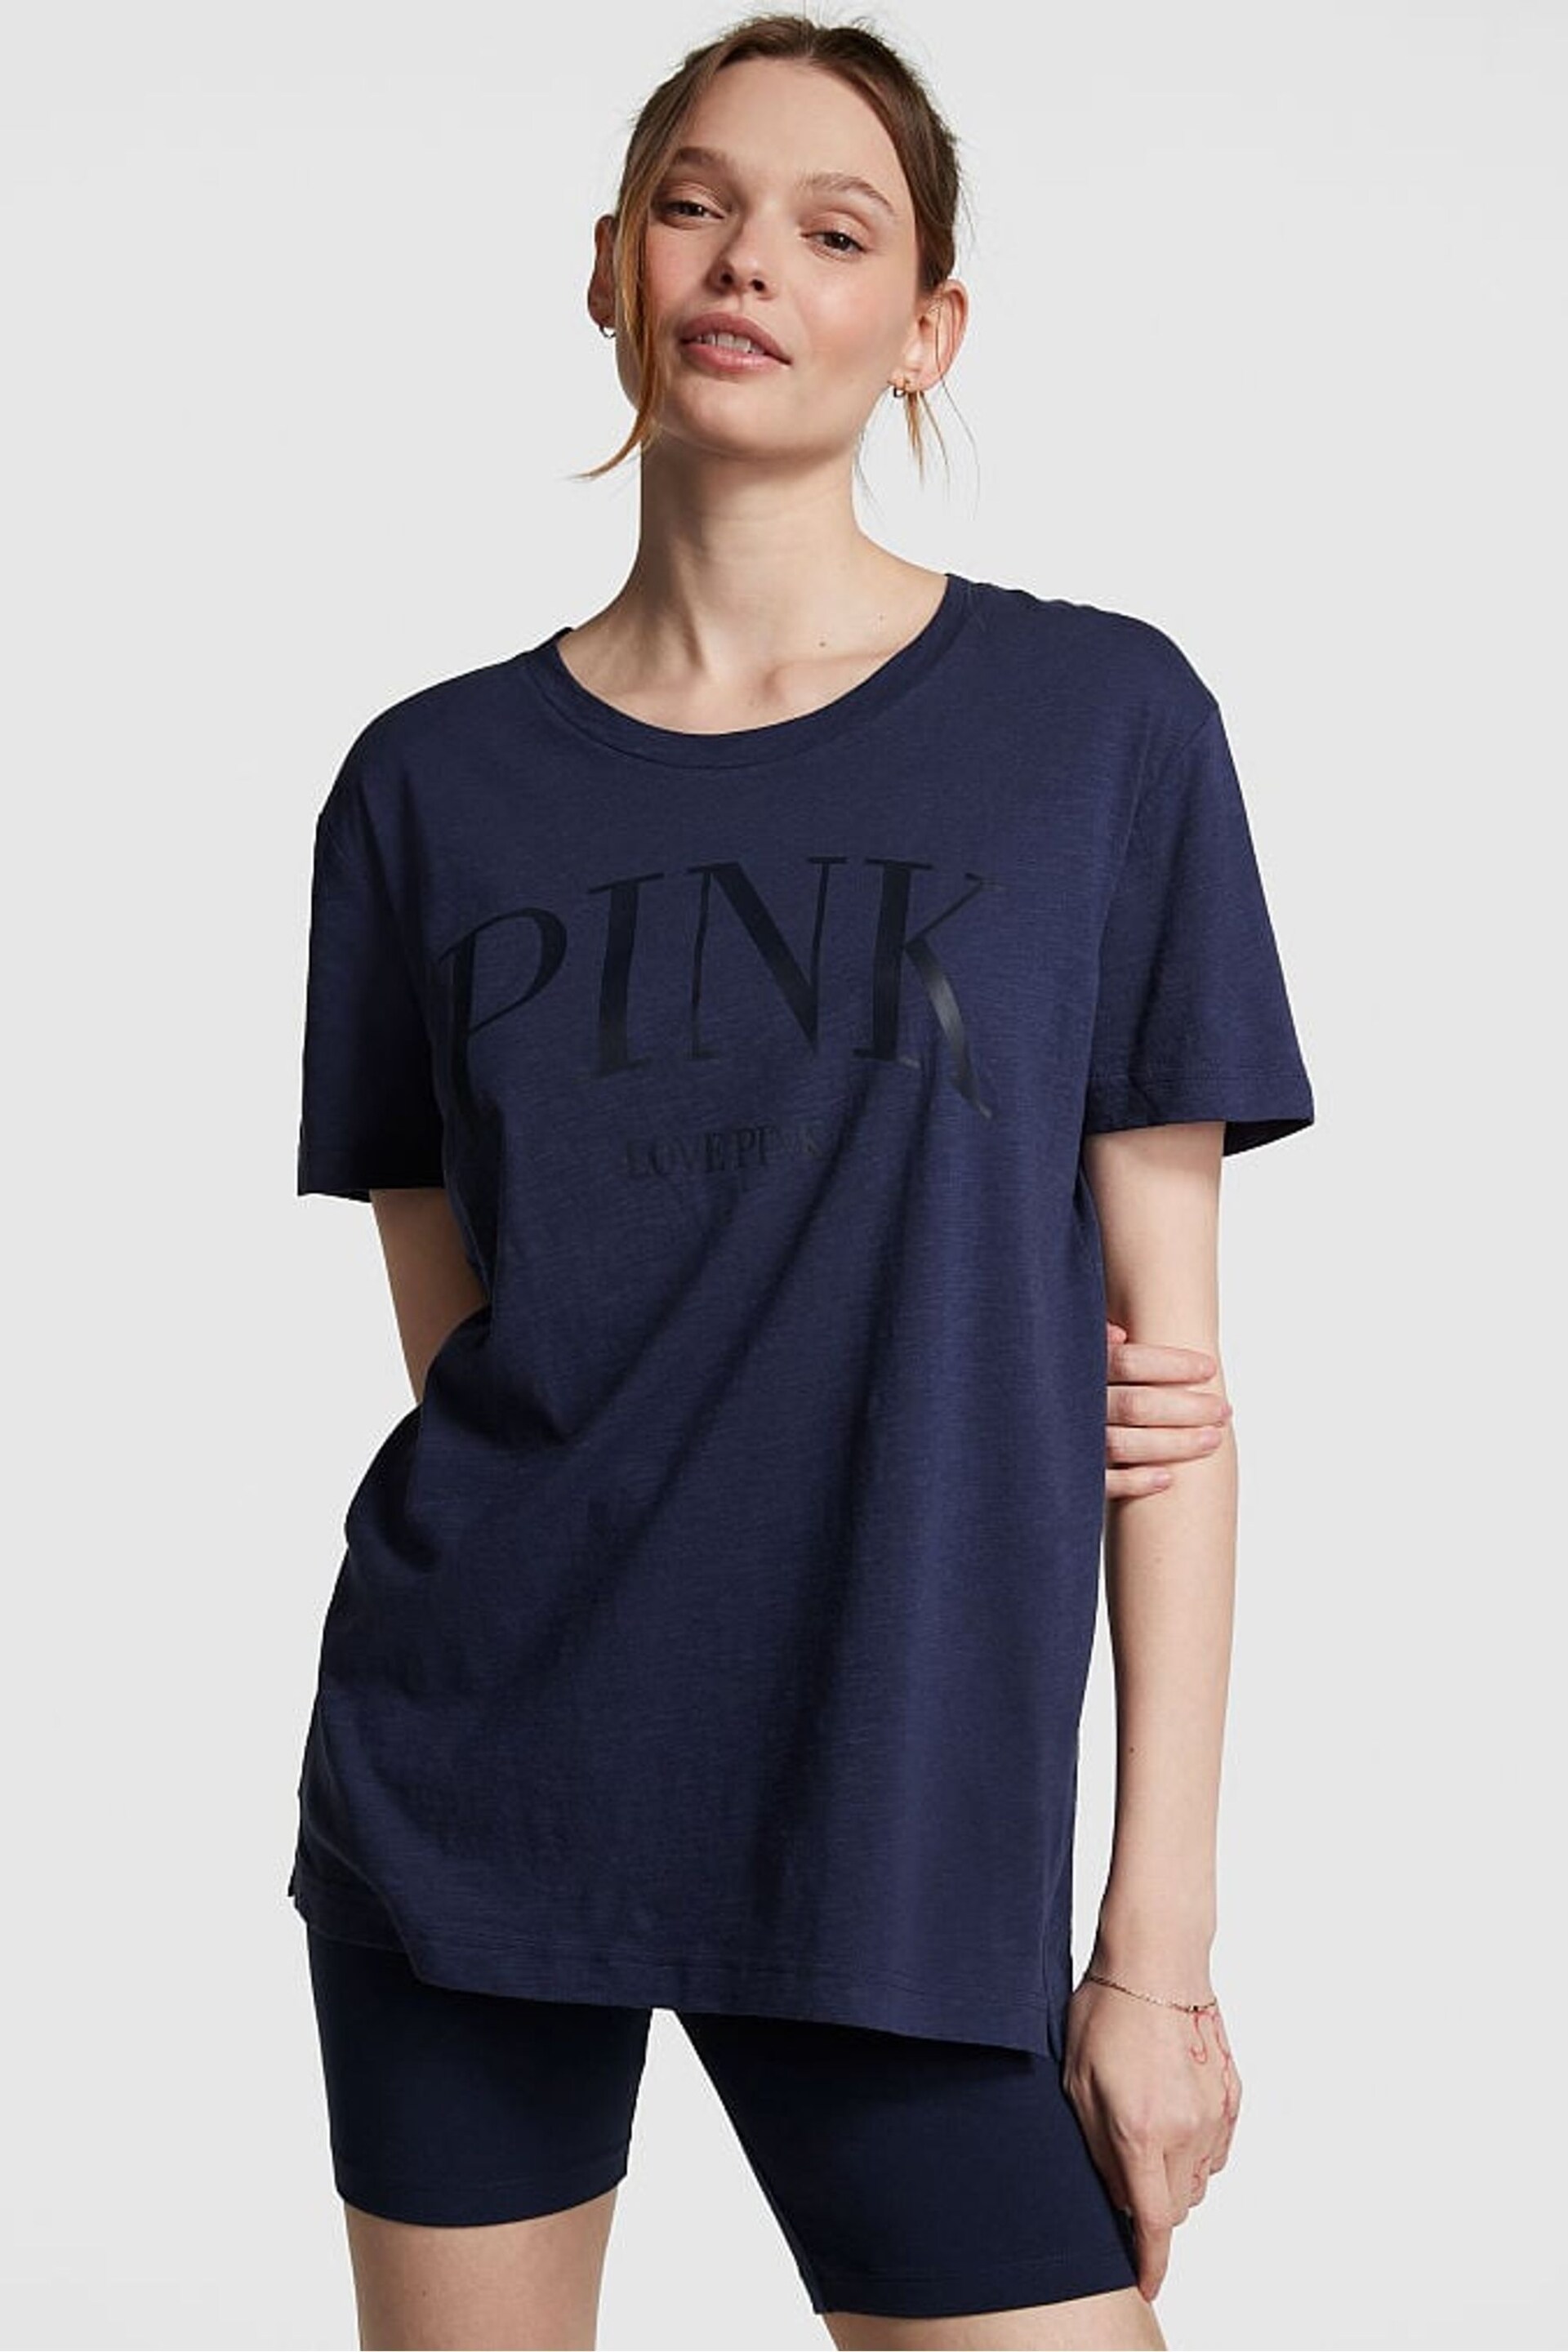 Victoria's Secret PINK Midnight Navy Blue Short Sleeve Slub T-Shirt - Image 1 of 4